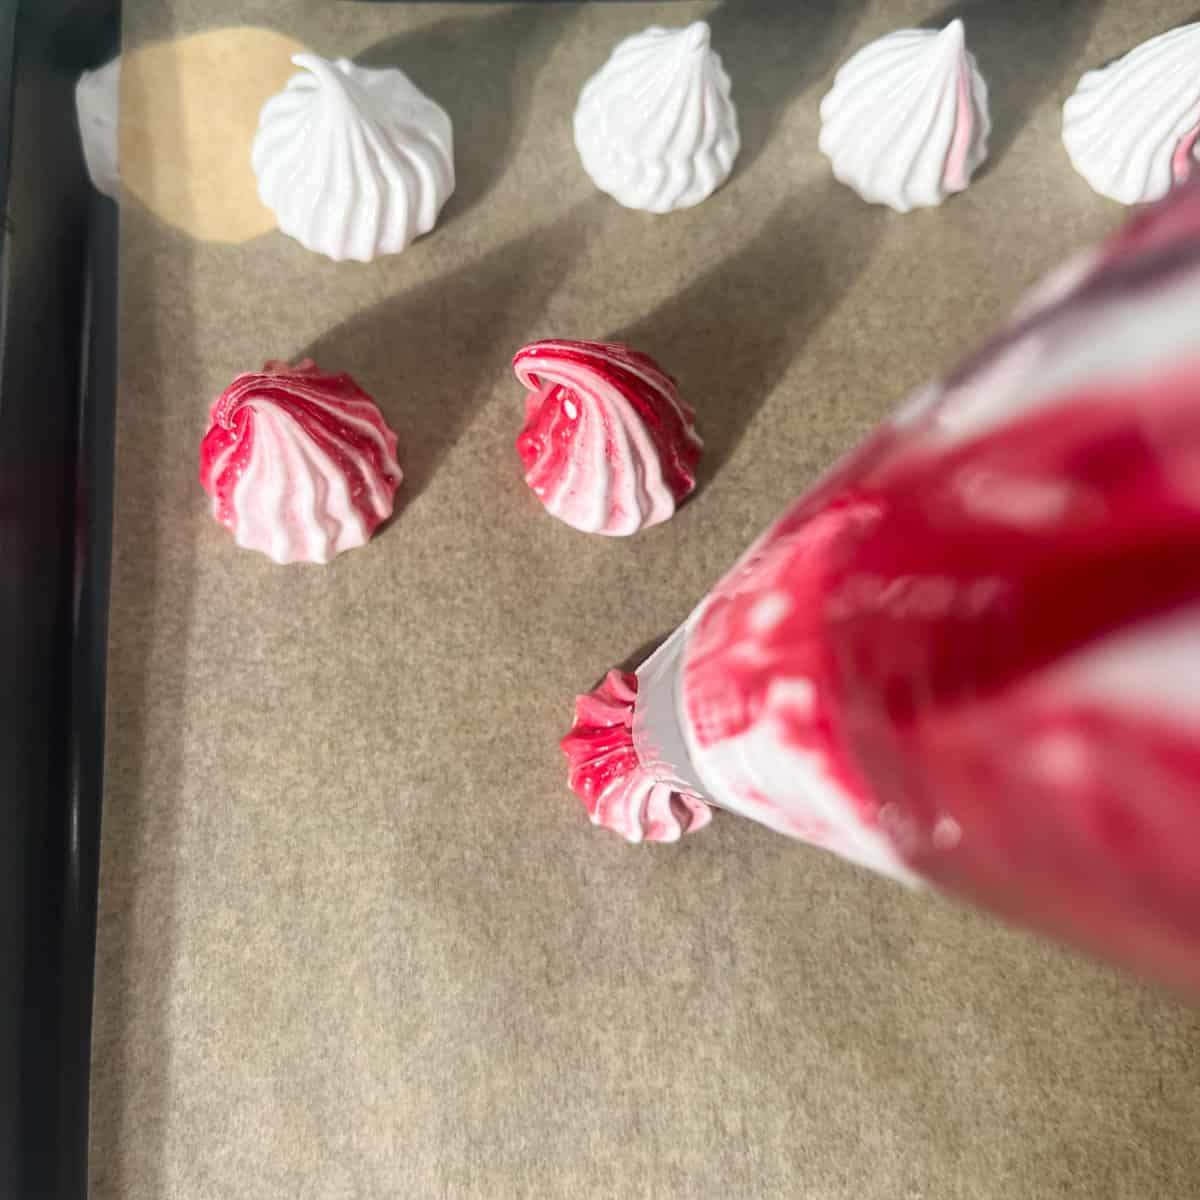 Piping mini meringues onto a baking sheet with a piping bag.